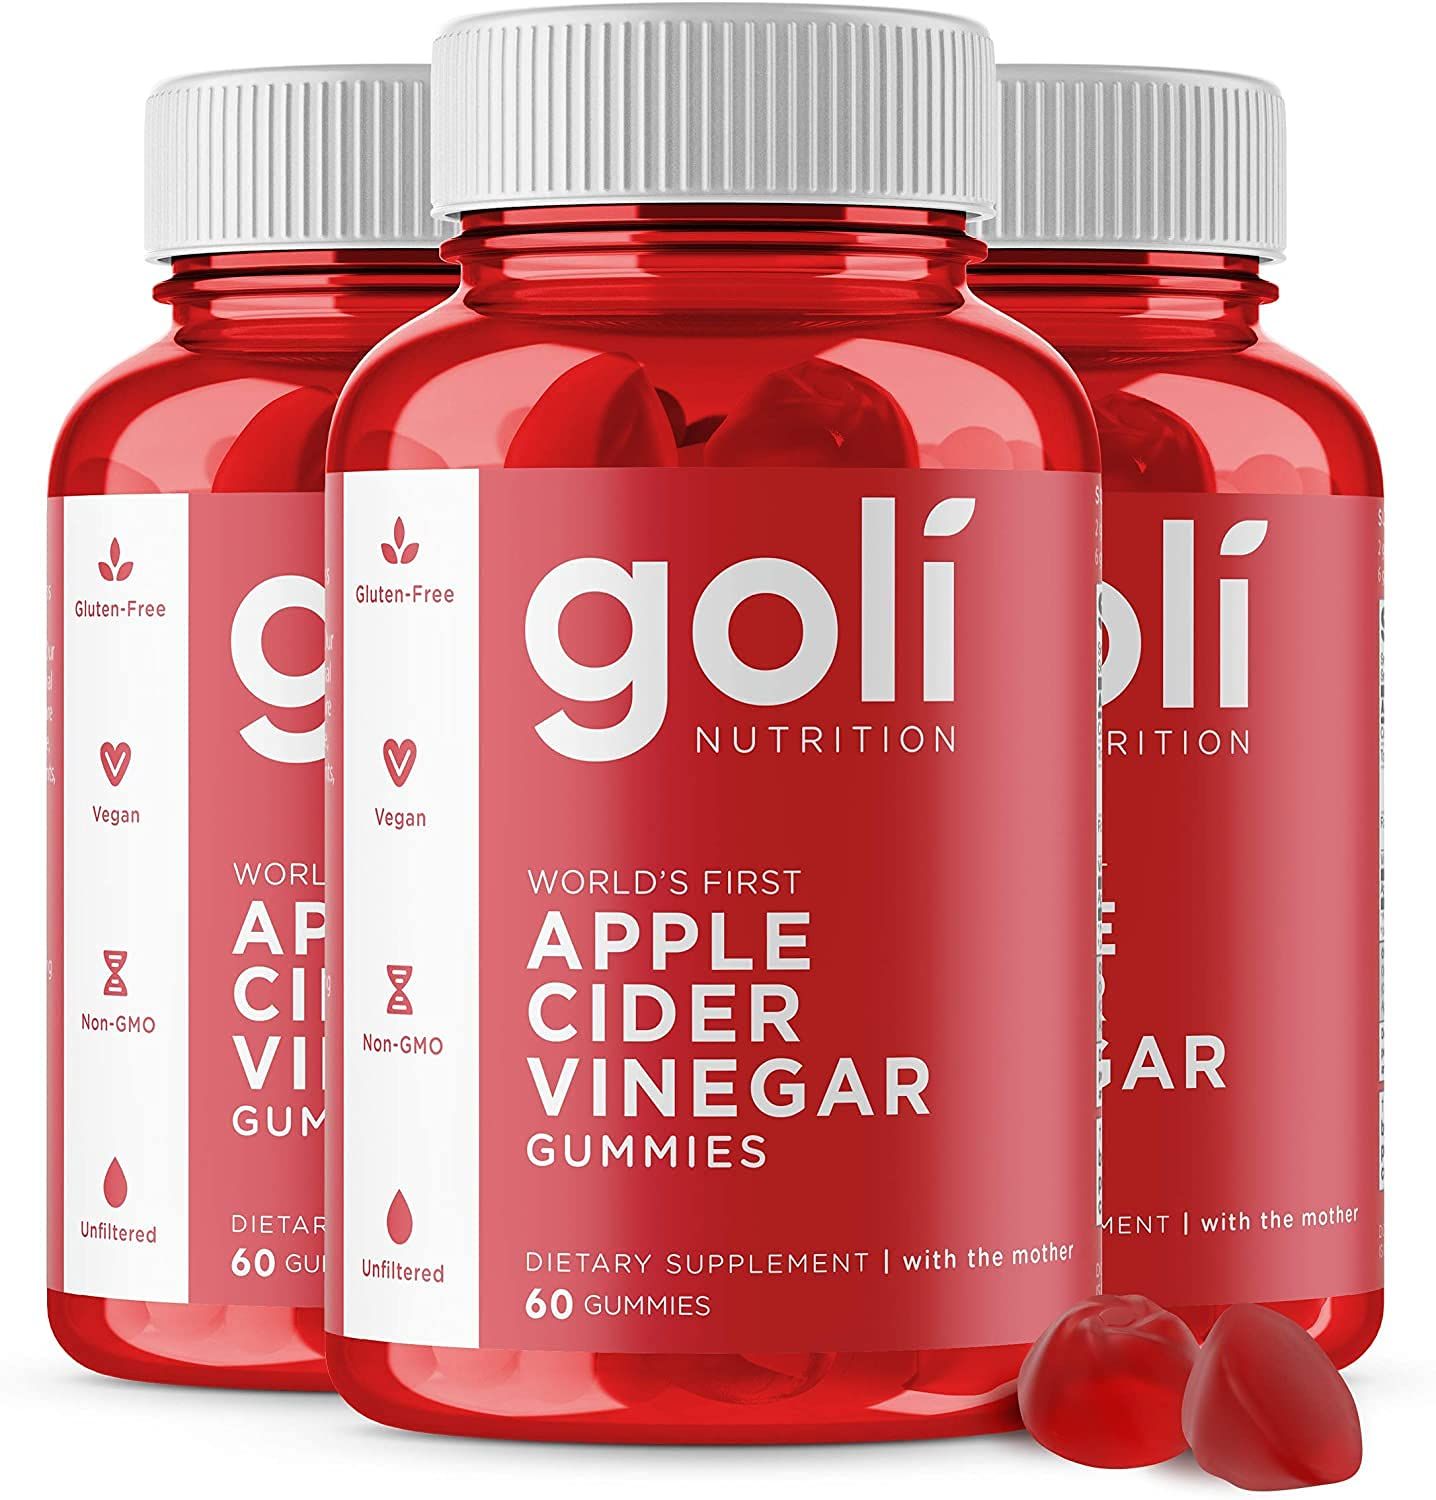 Goli World's First Apple Cider Vinegar Gummy Image